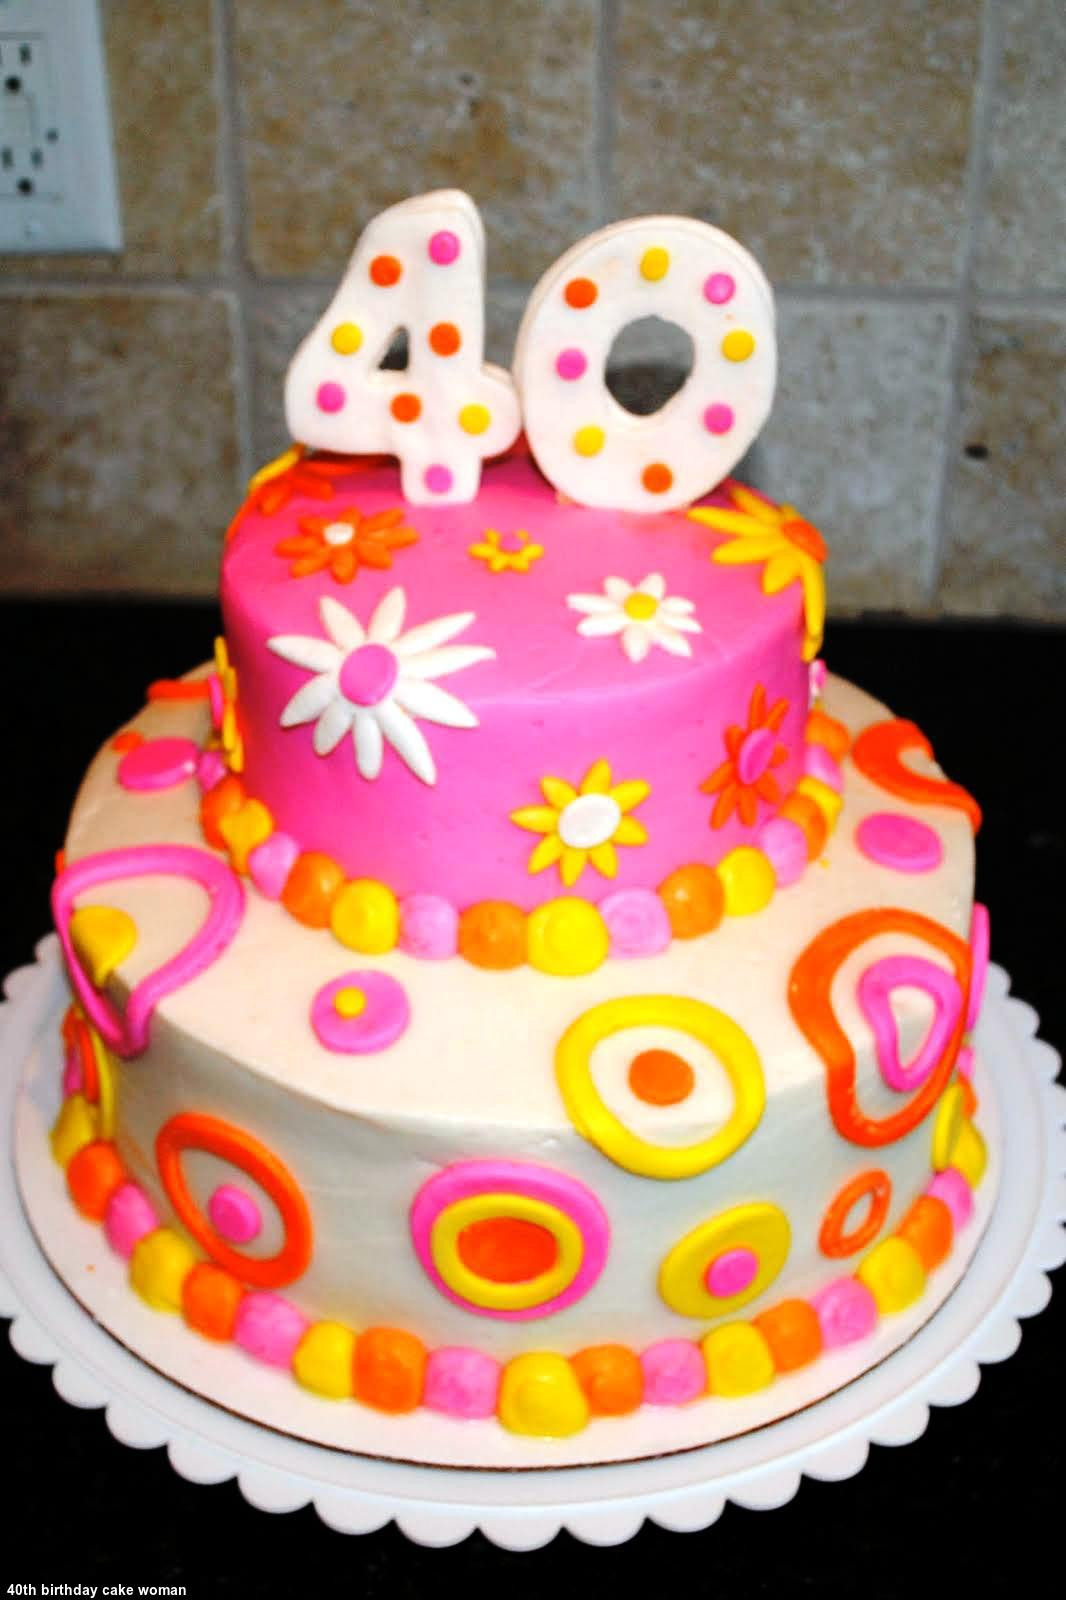 40th Birthday Cake Ideas
 40th Birthday Cake Woman Insipiration 2015 The Best